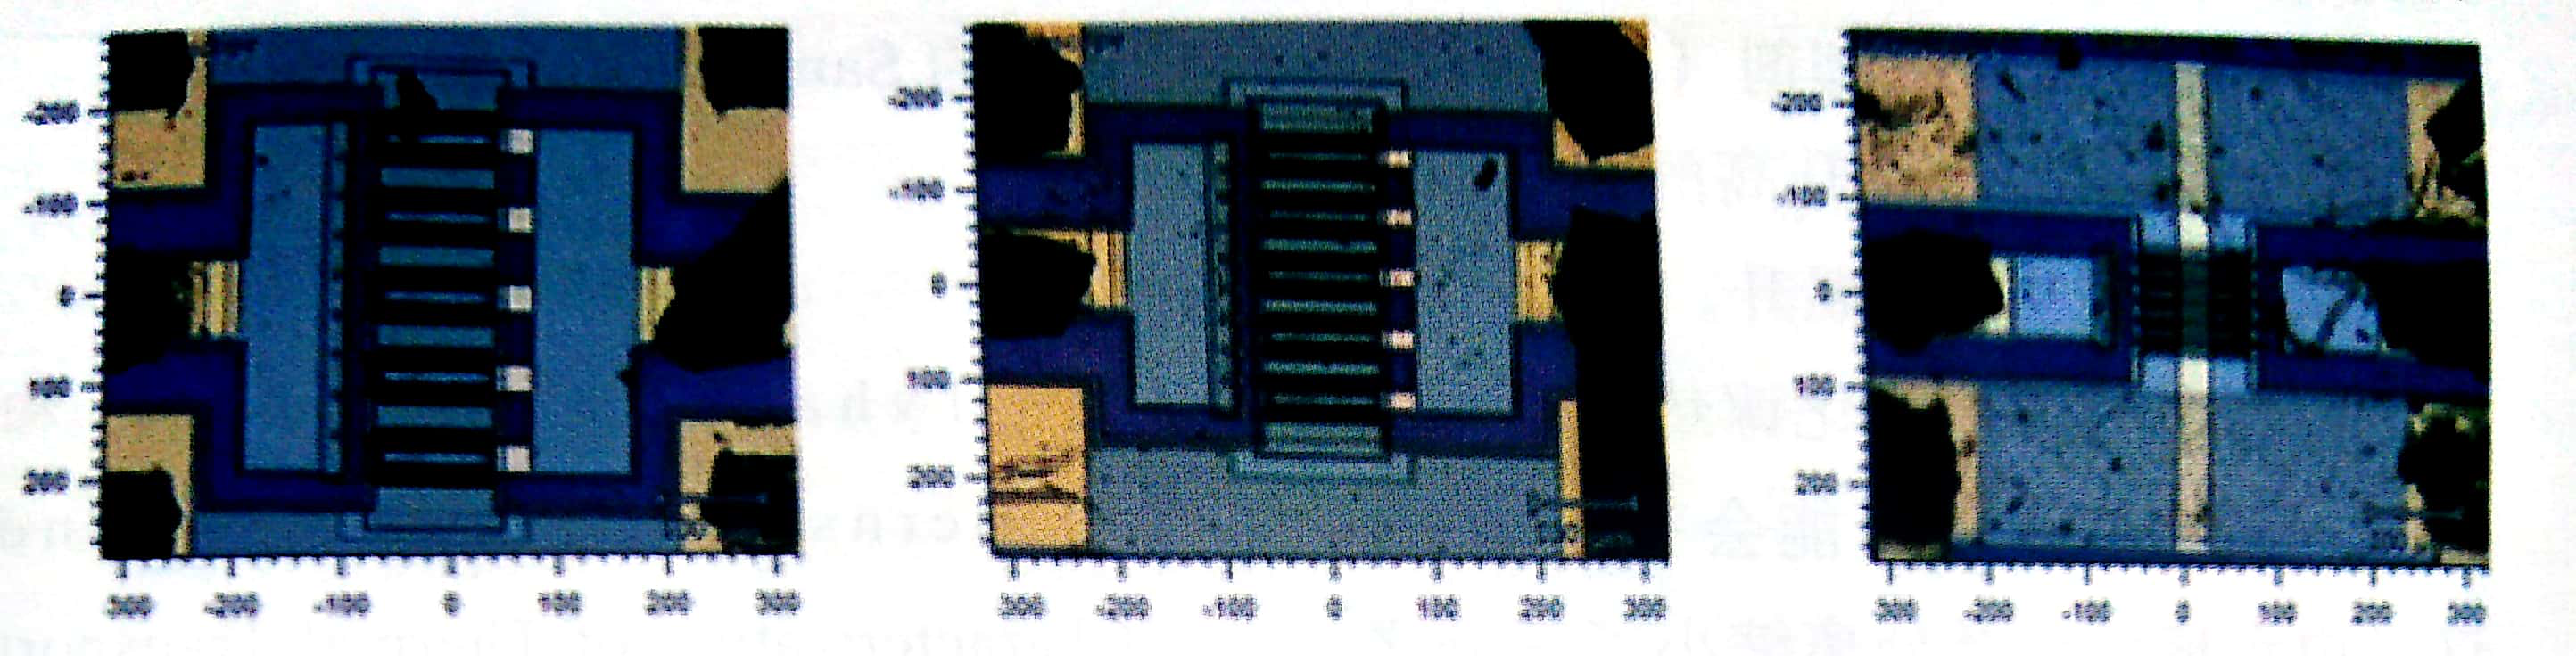 SiC基氮化镓40微米栅-栅间隔